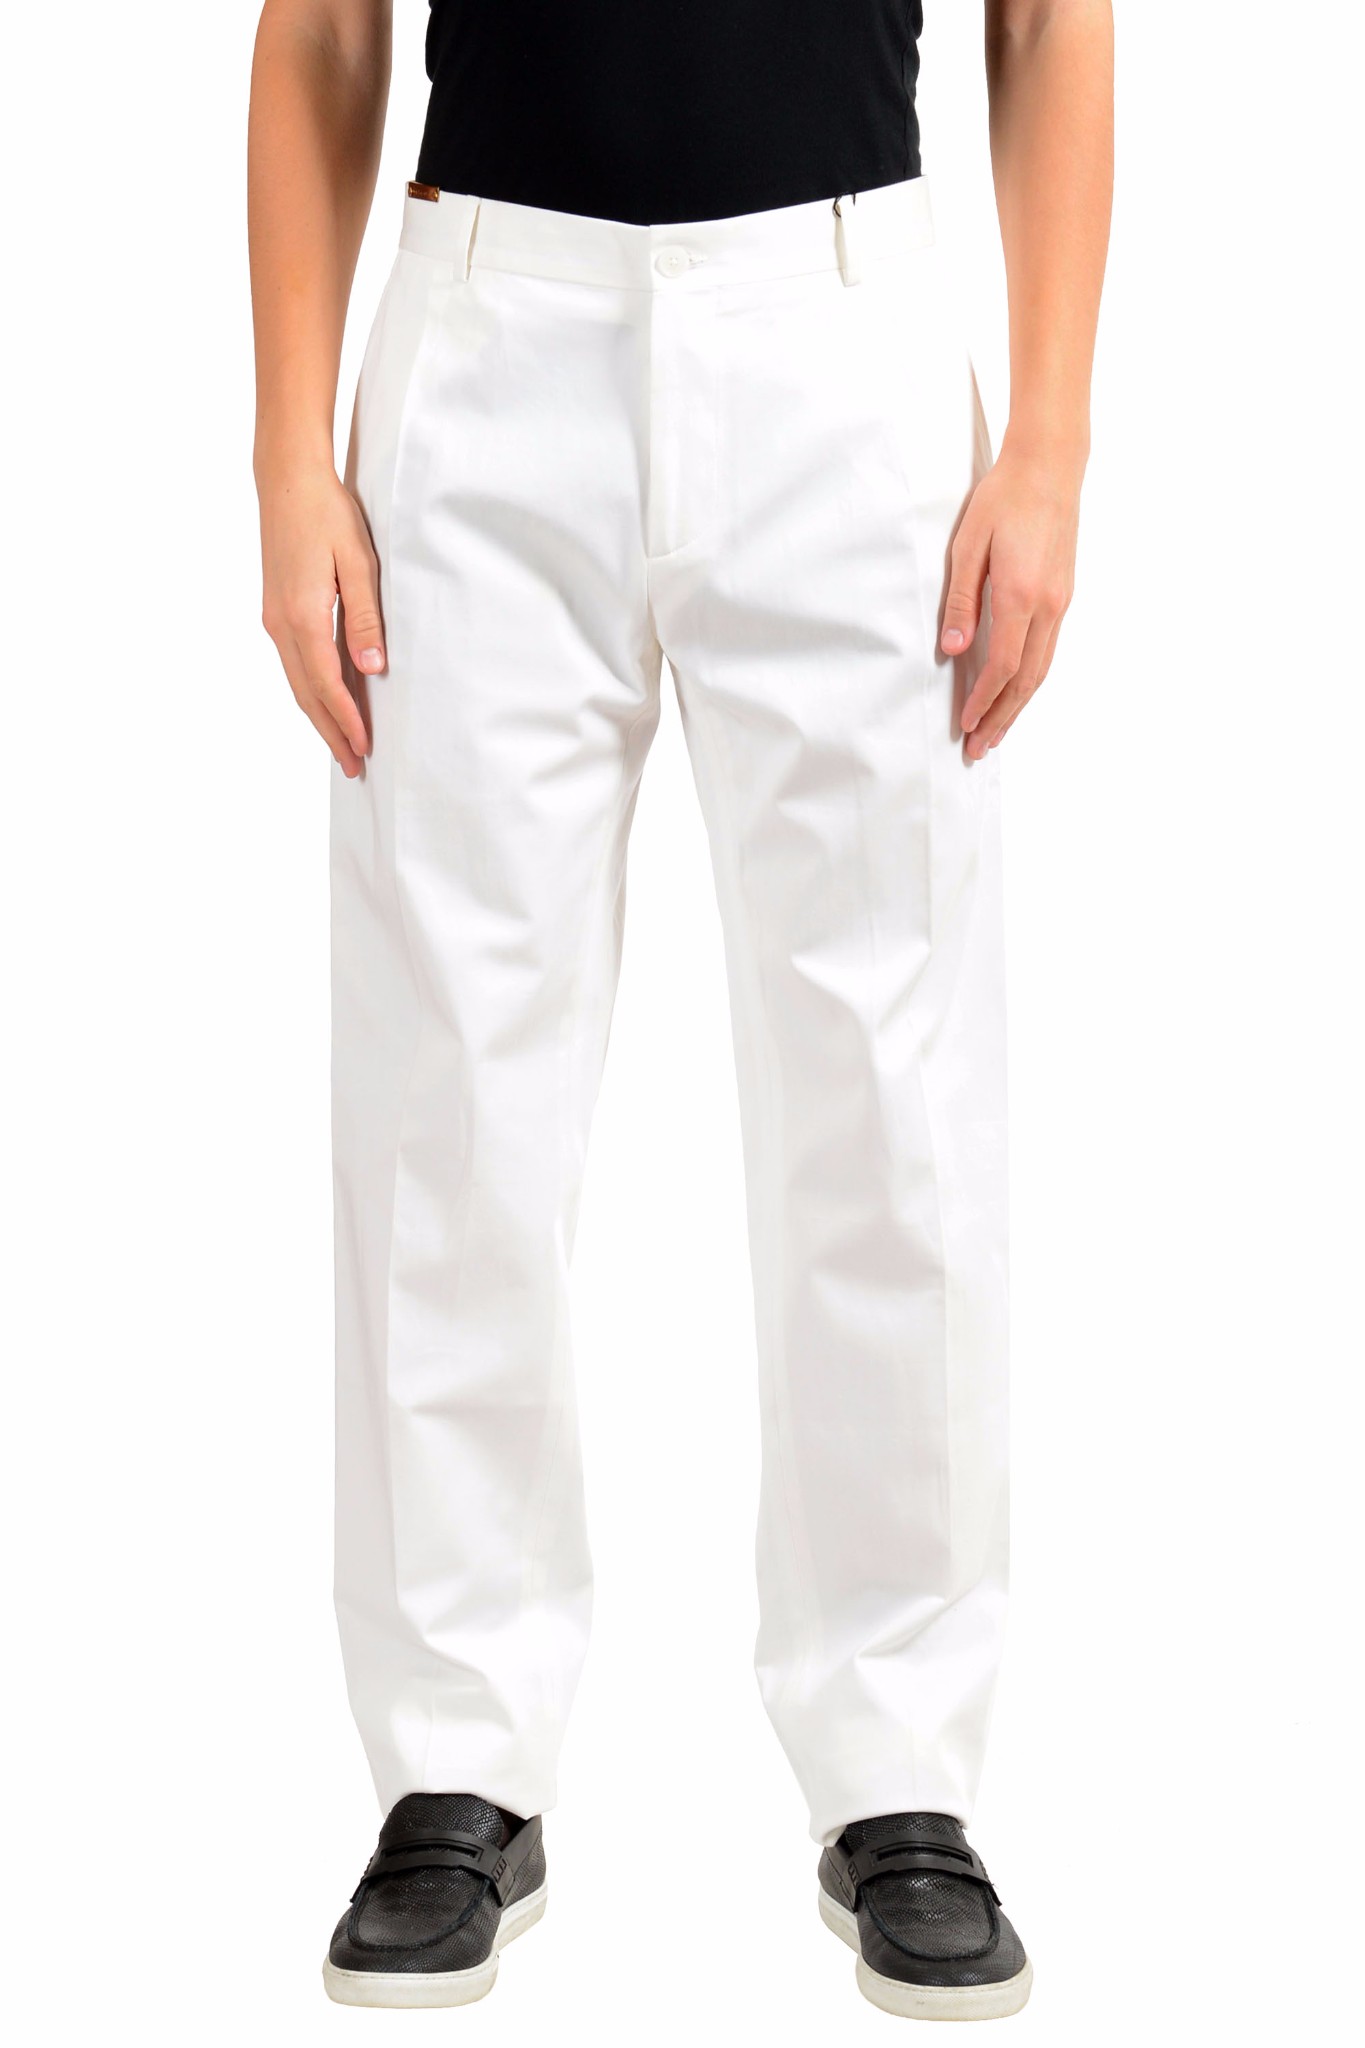 Dolce & Gabbana Men's White Pleated Dress Pants Size 32 34 36 38 | eBay